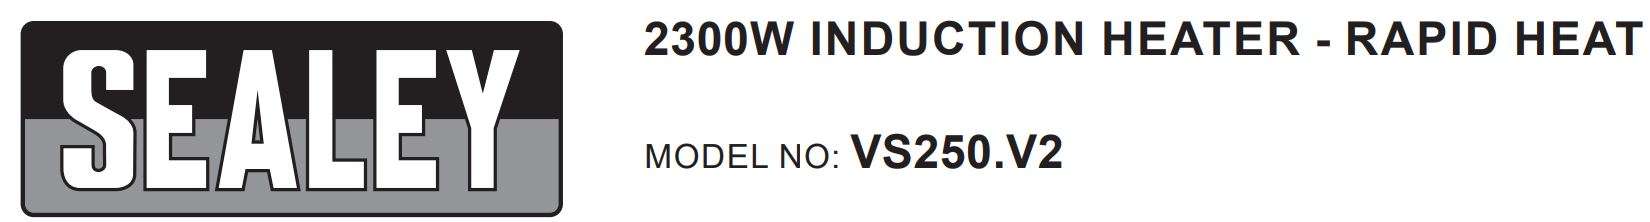 SEALEY VS250.V2 2300W Induction Heater Rapid Heat Instruction Manual